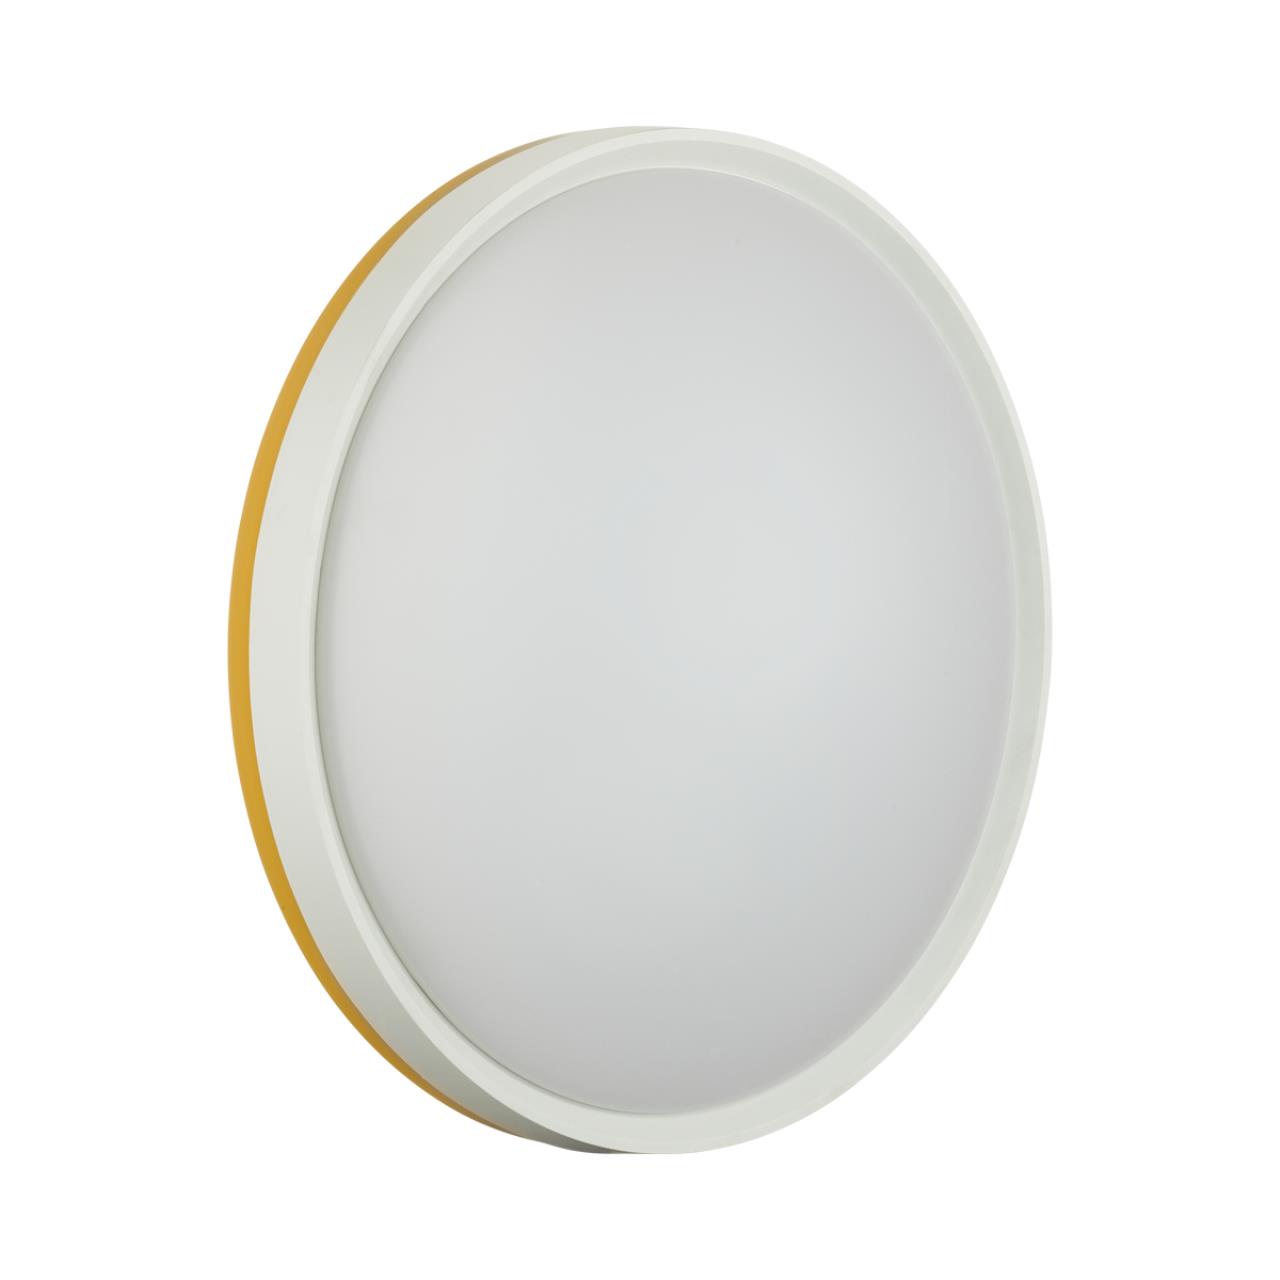 Cветильник 40 см, LED 1*48W, 4000 К, Sonex Kezo Yellow 7709/DL, белый/желтый